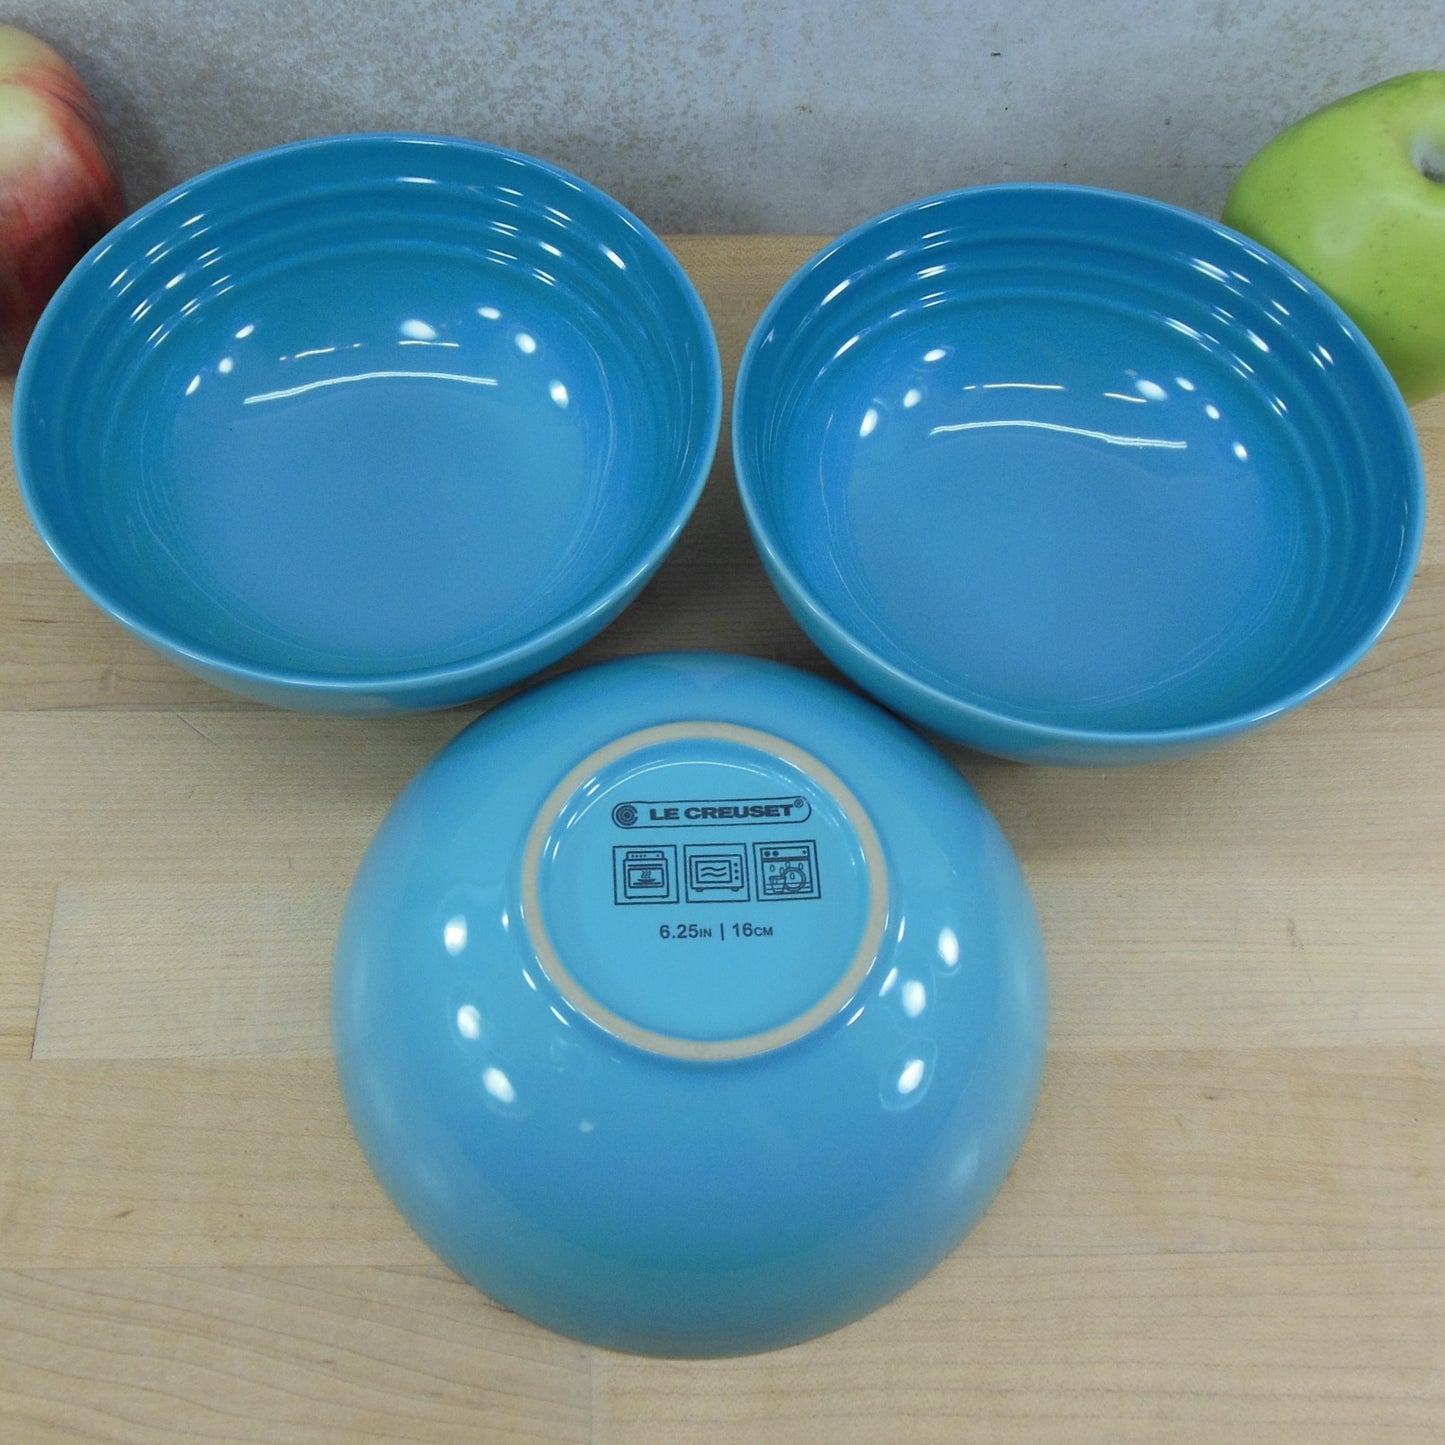 Le Creuset Stoneware Caribbean Blue Teal - 3 Cereal Bowls 6.25" aqua turquoise